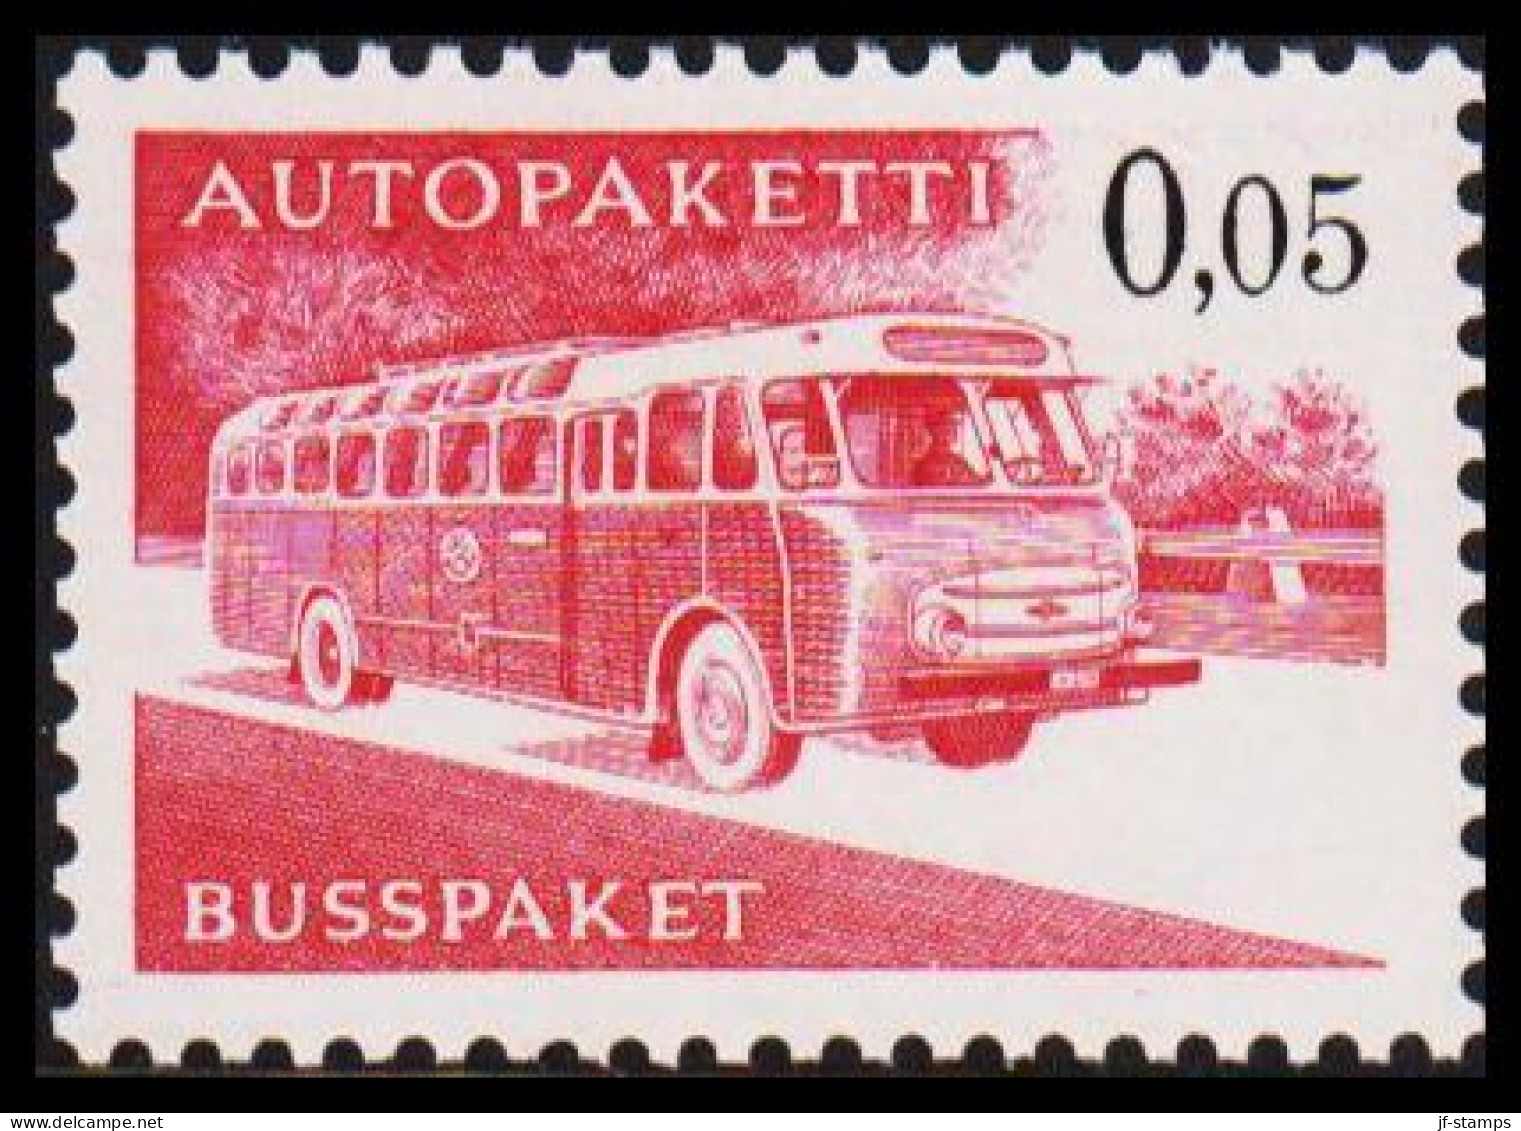 1963-1980. FINLAND. Mail Bus. 0,05 Mk. AUTOPAKETTI - BUSSPAKET Never Hinged. Normal Paper. (Michel AP 10x) - JF535622 - Pakjes Per Postbus